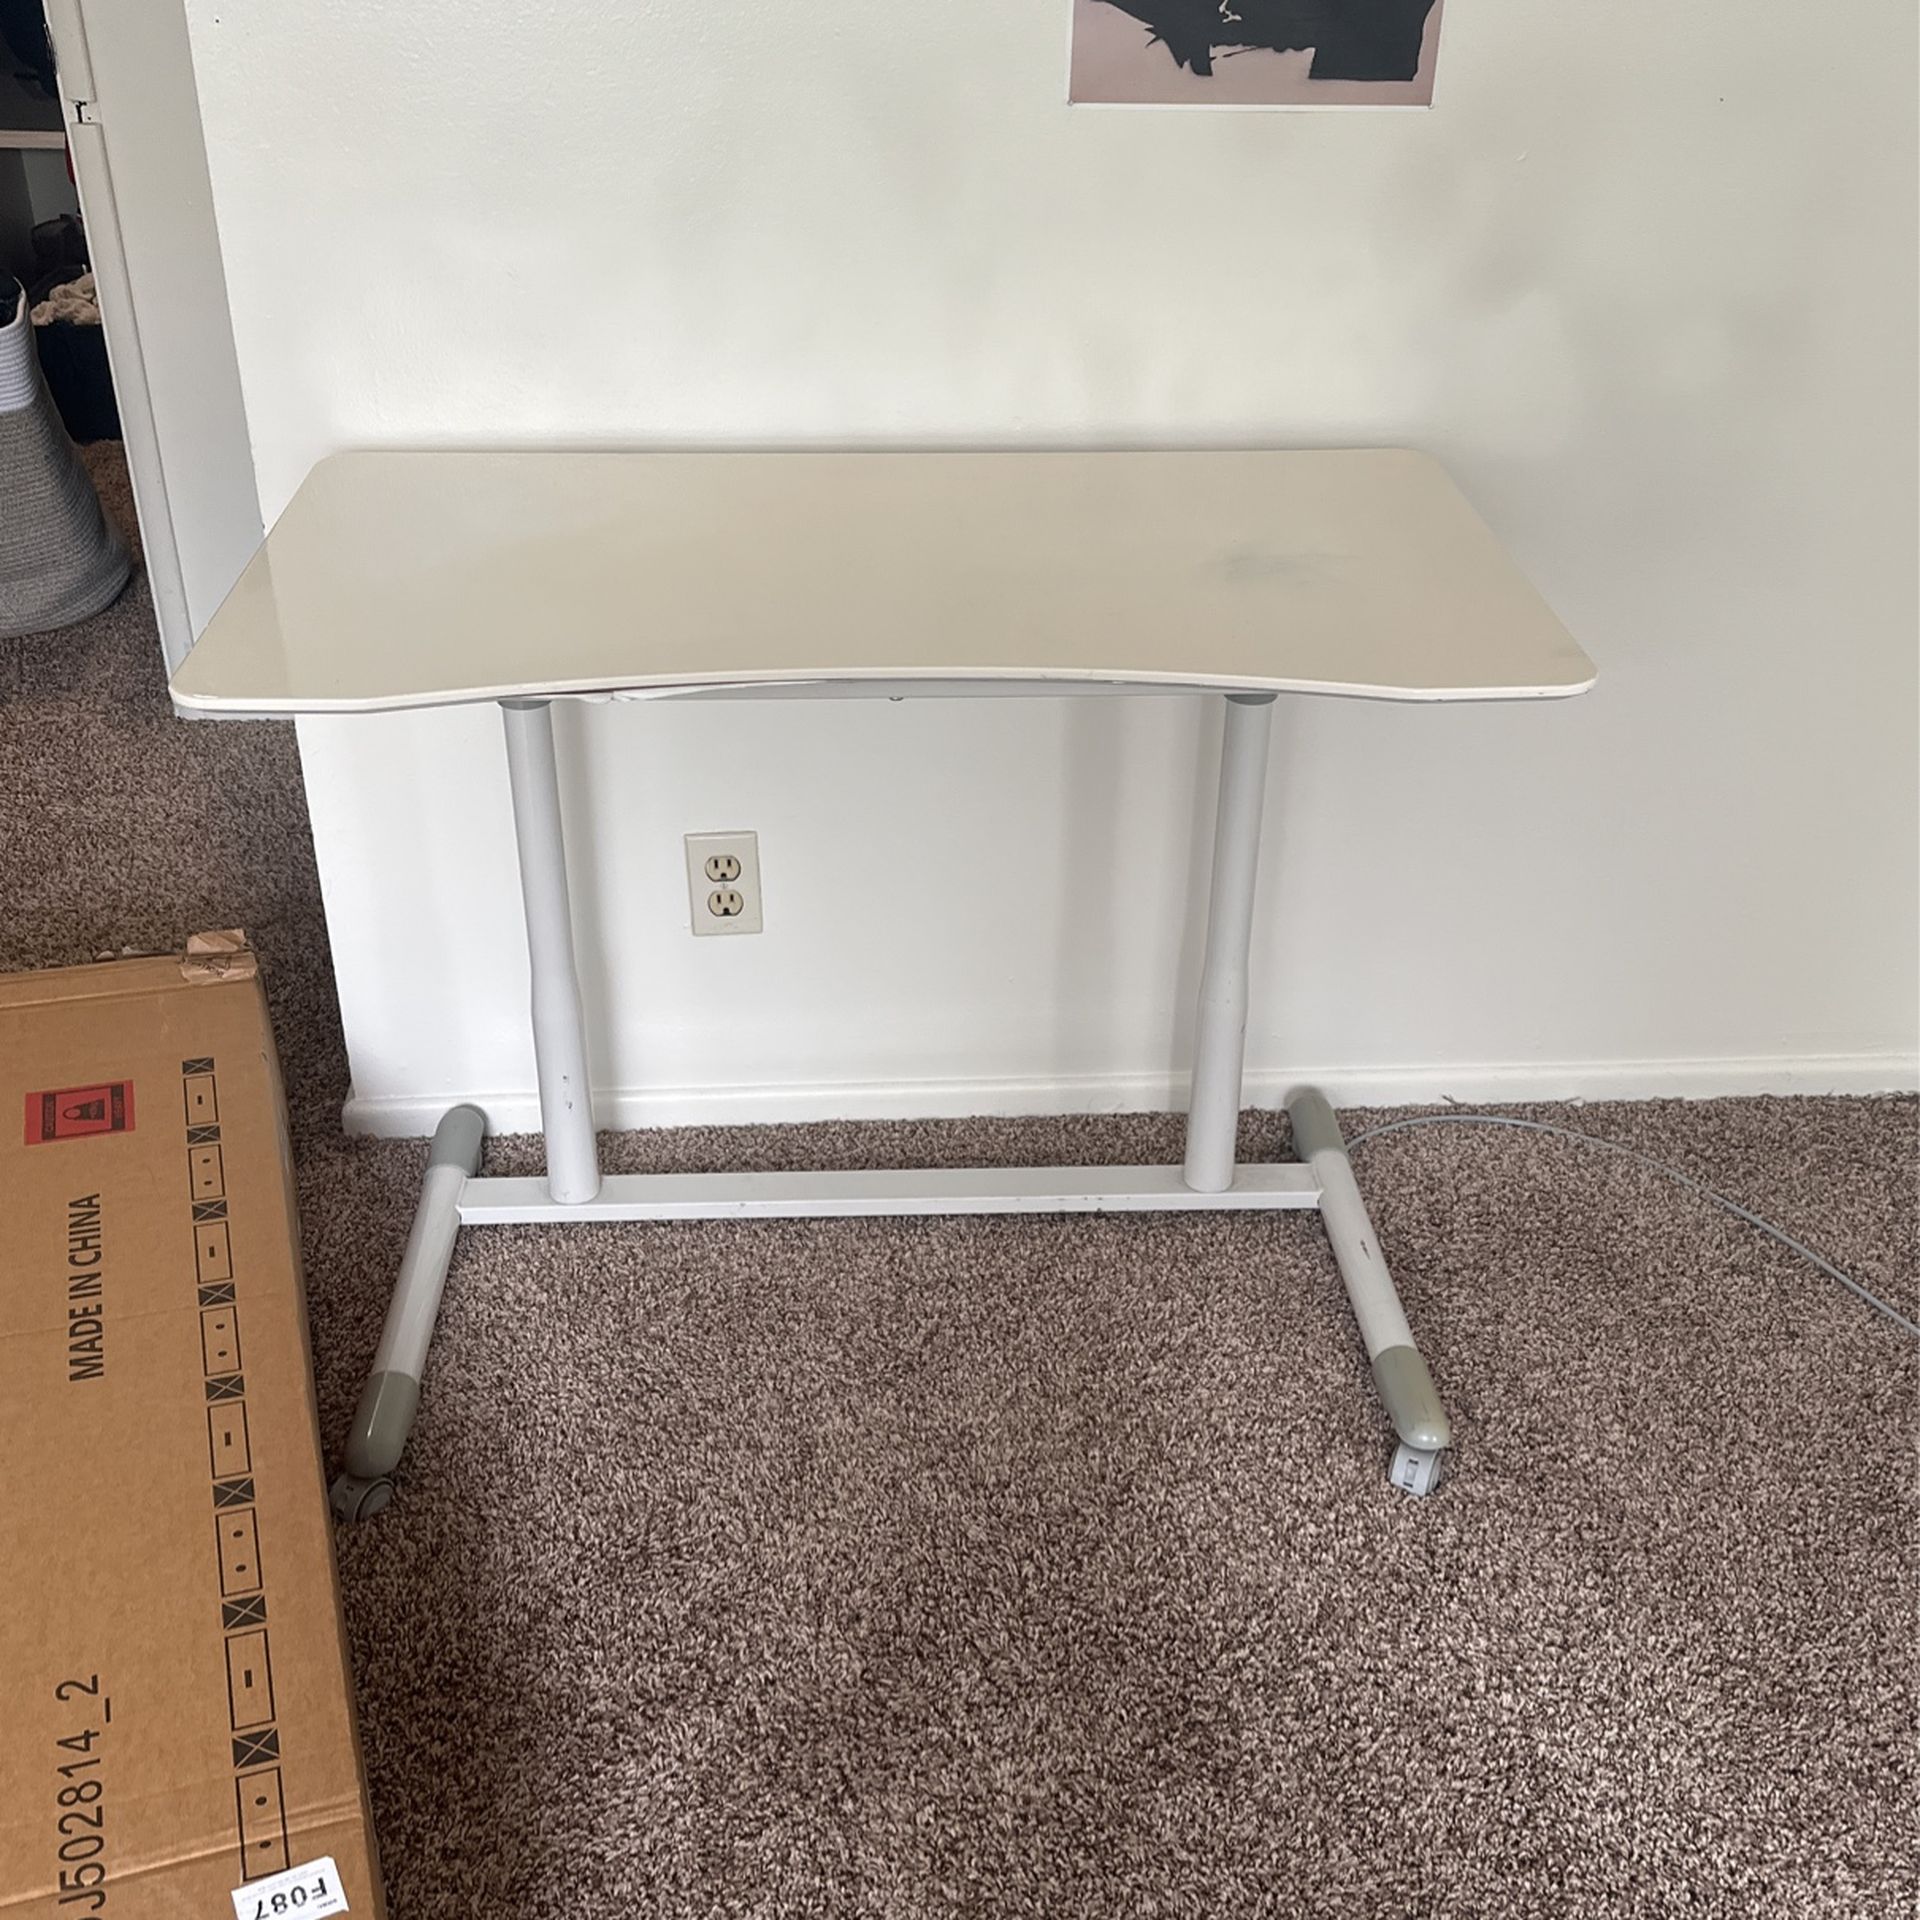 Adjustable Standing Desk 